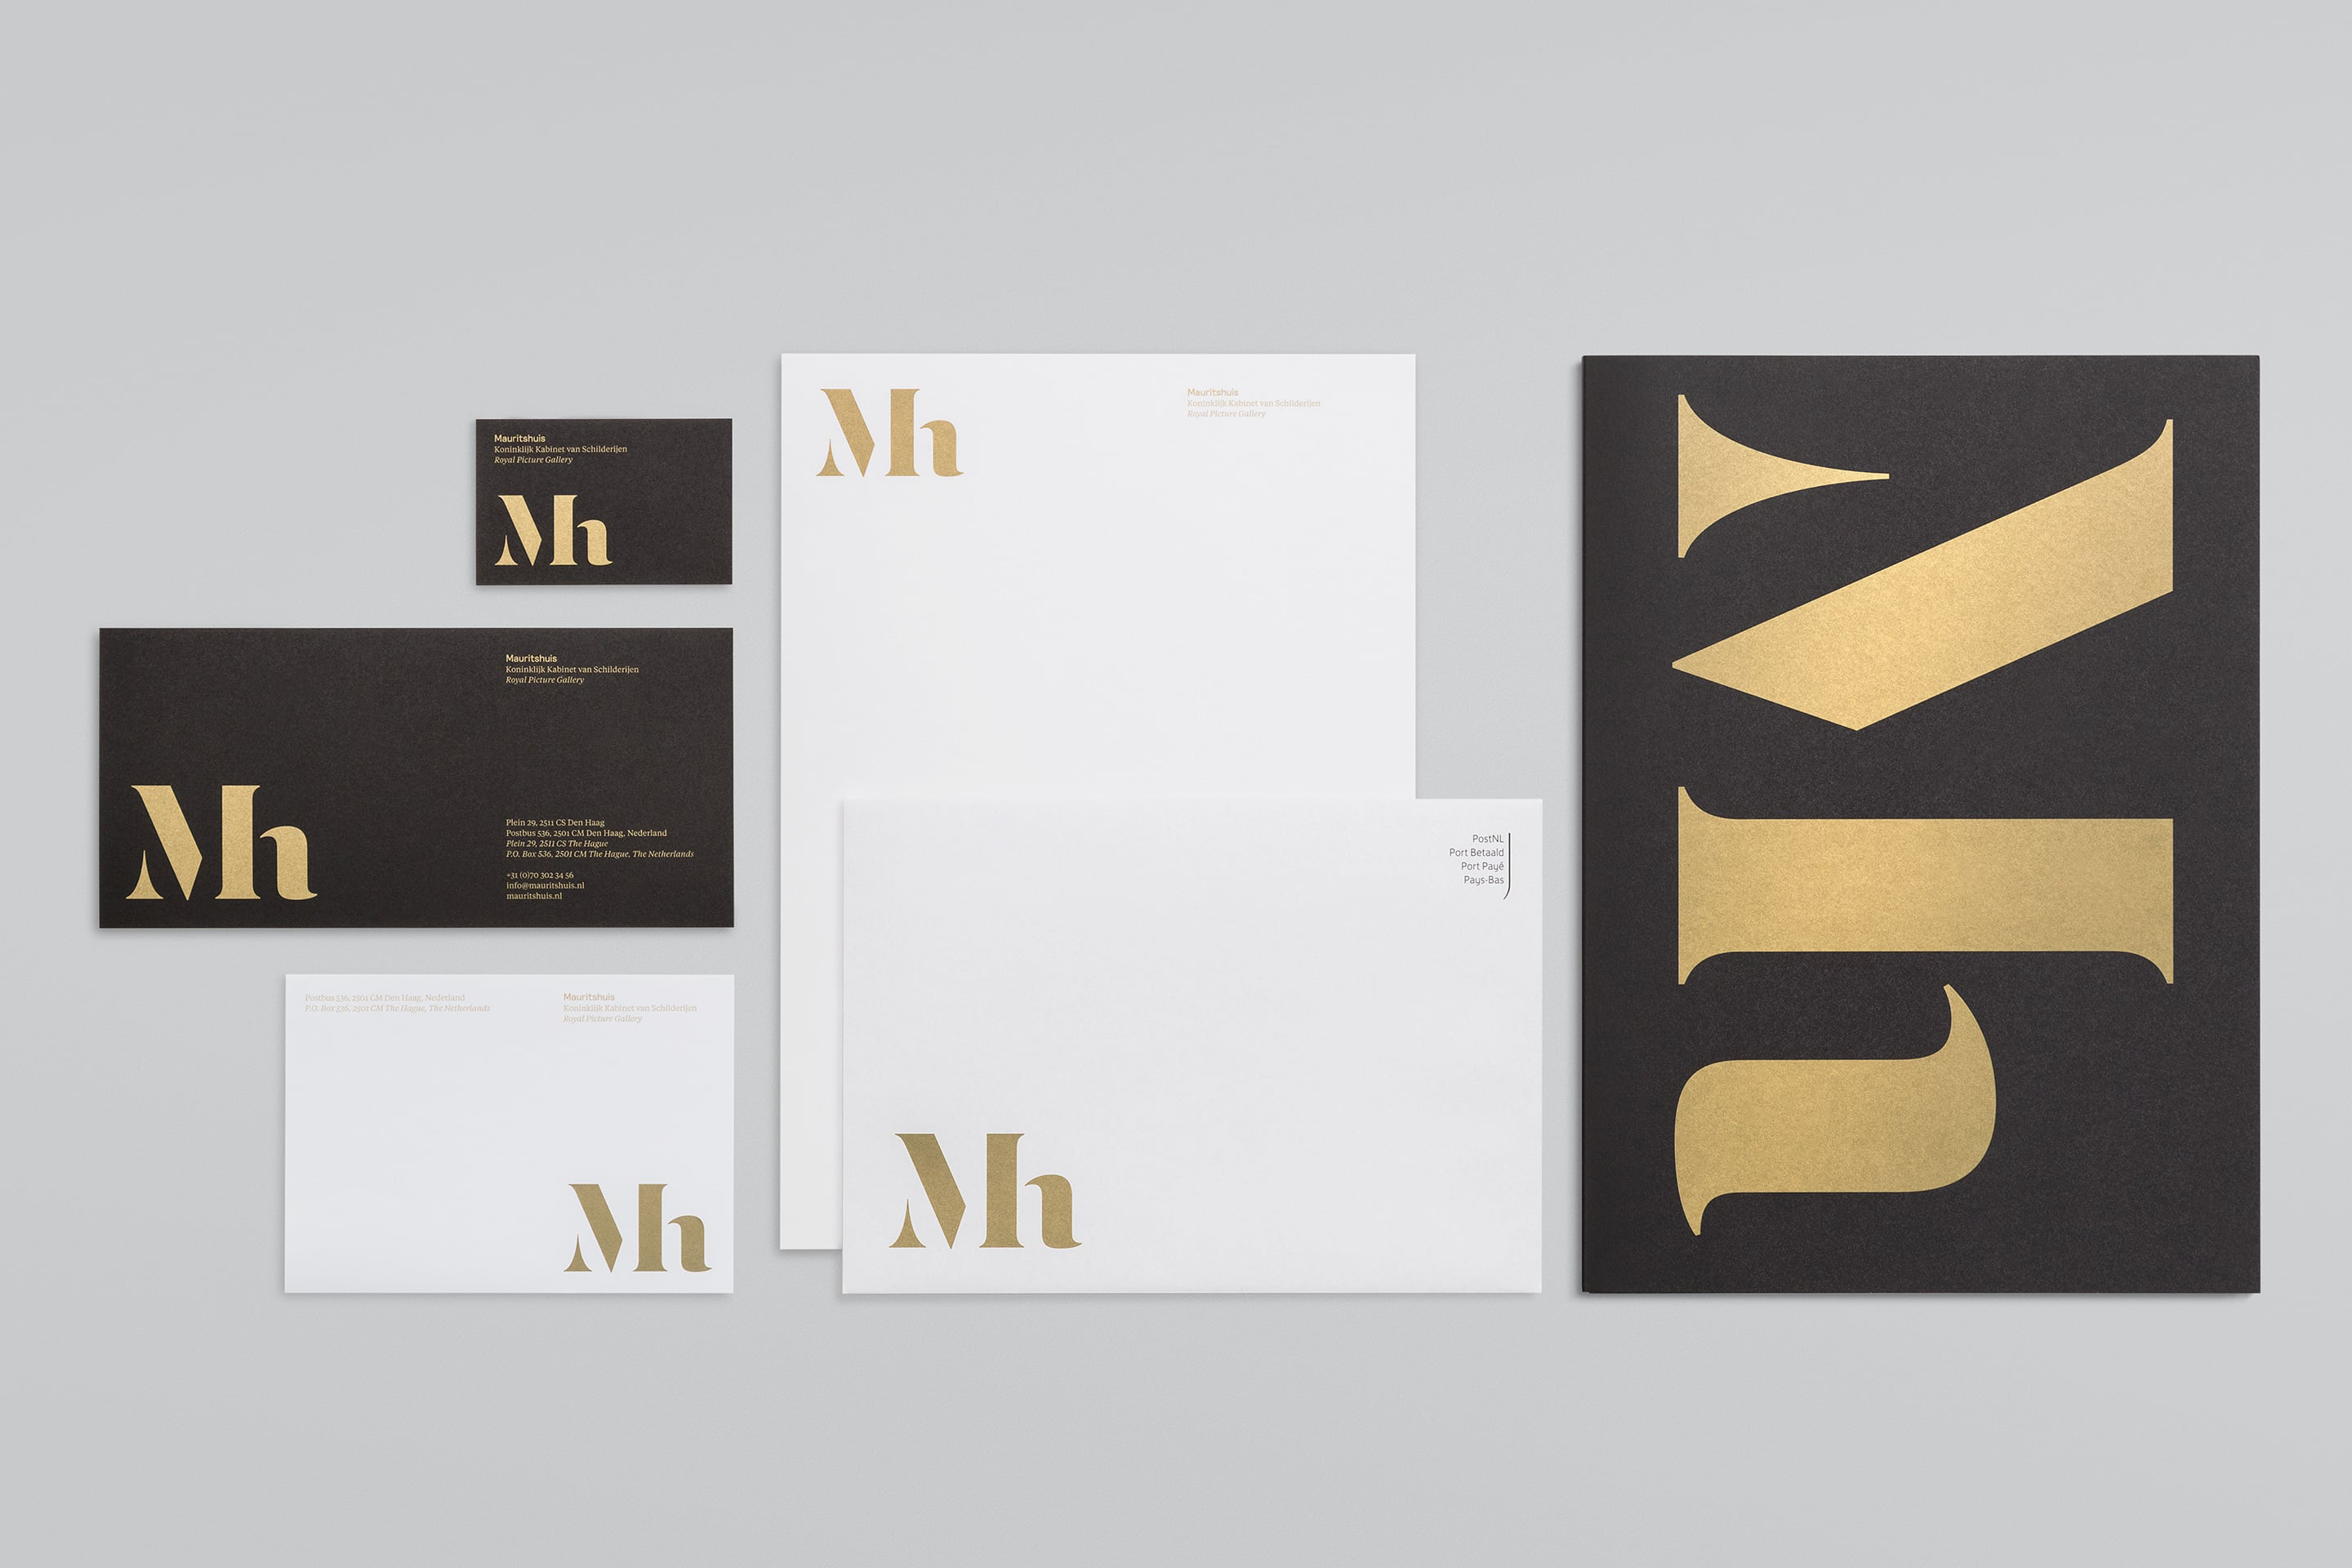 studio dumbar design visual brand identity for Mauritshuis Royal Picture Gallery stationer design monogram logo design